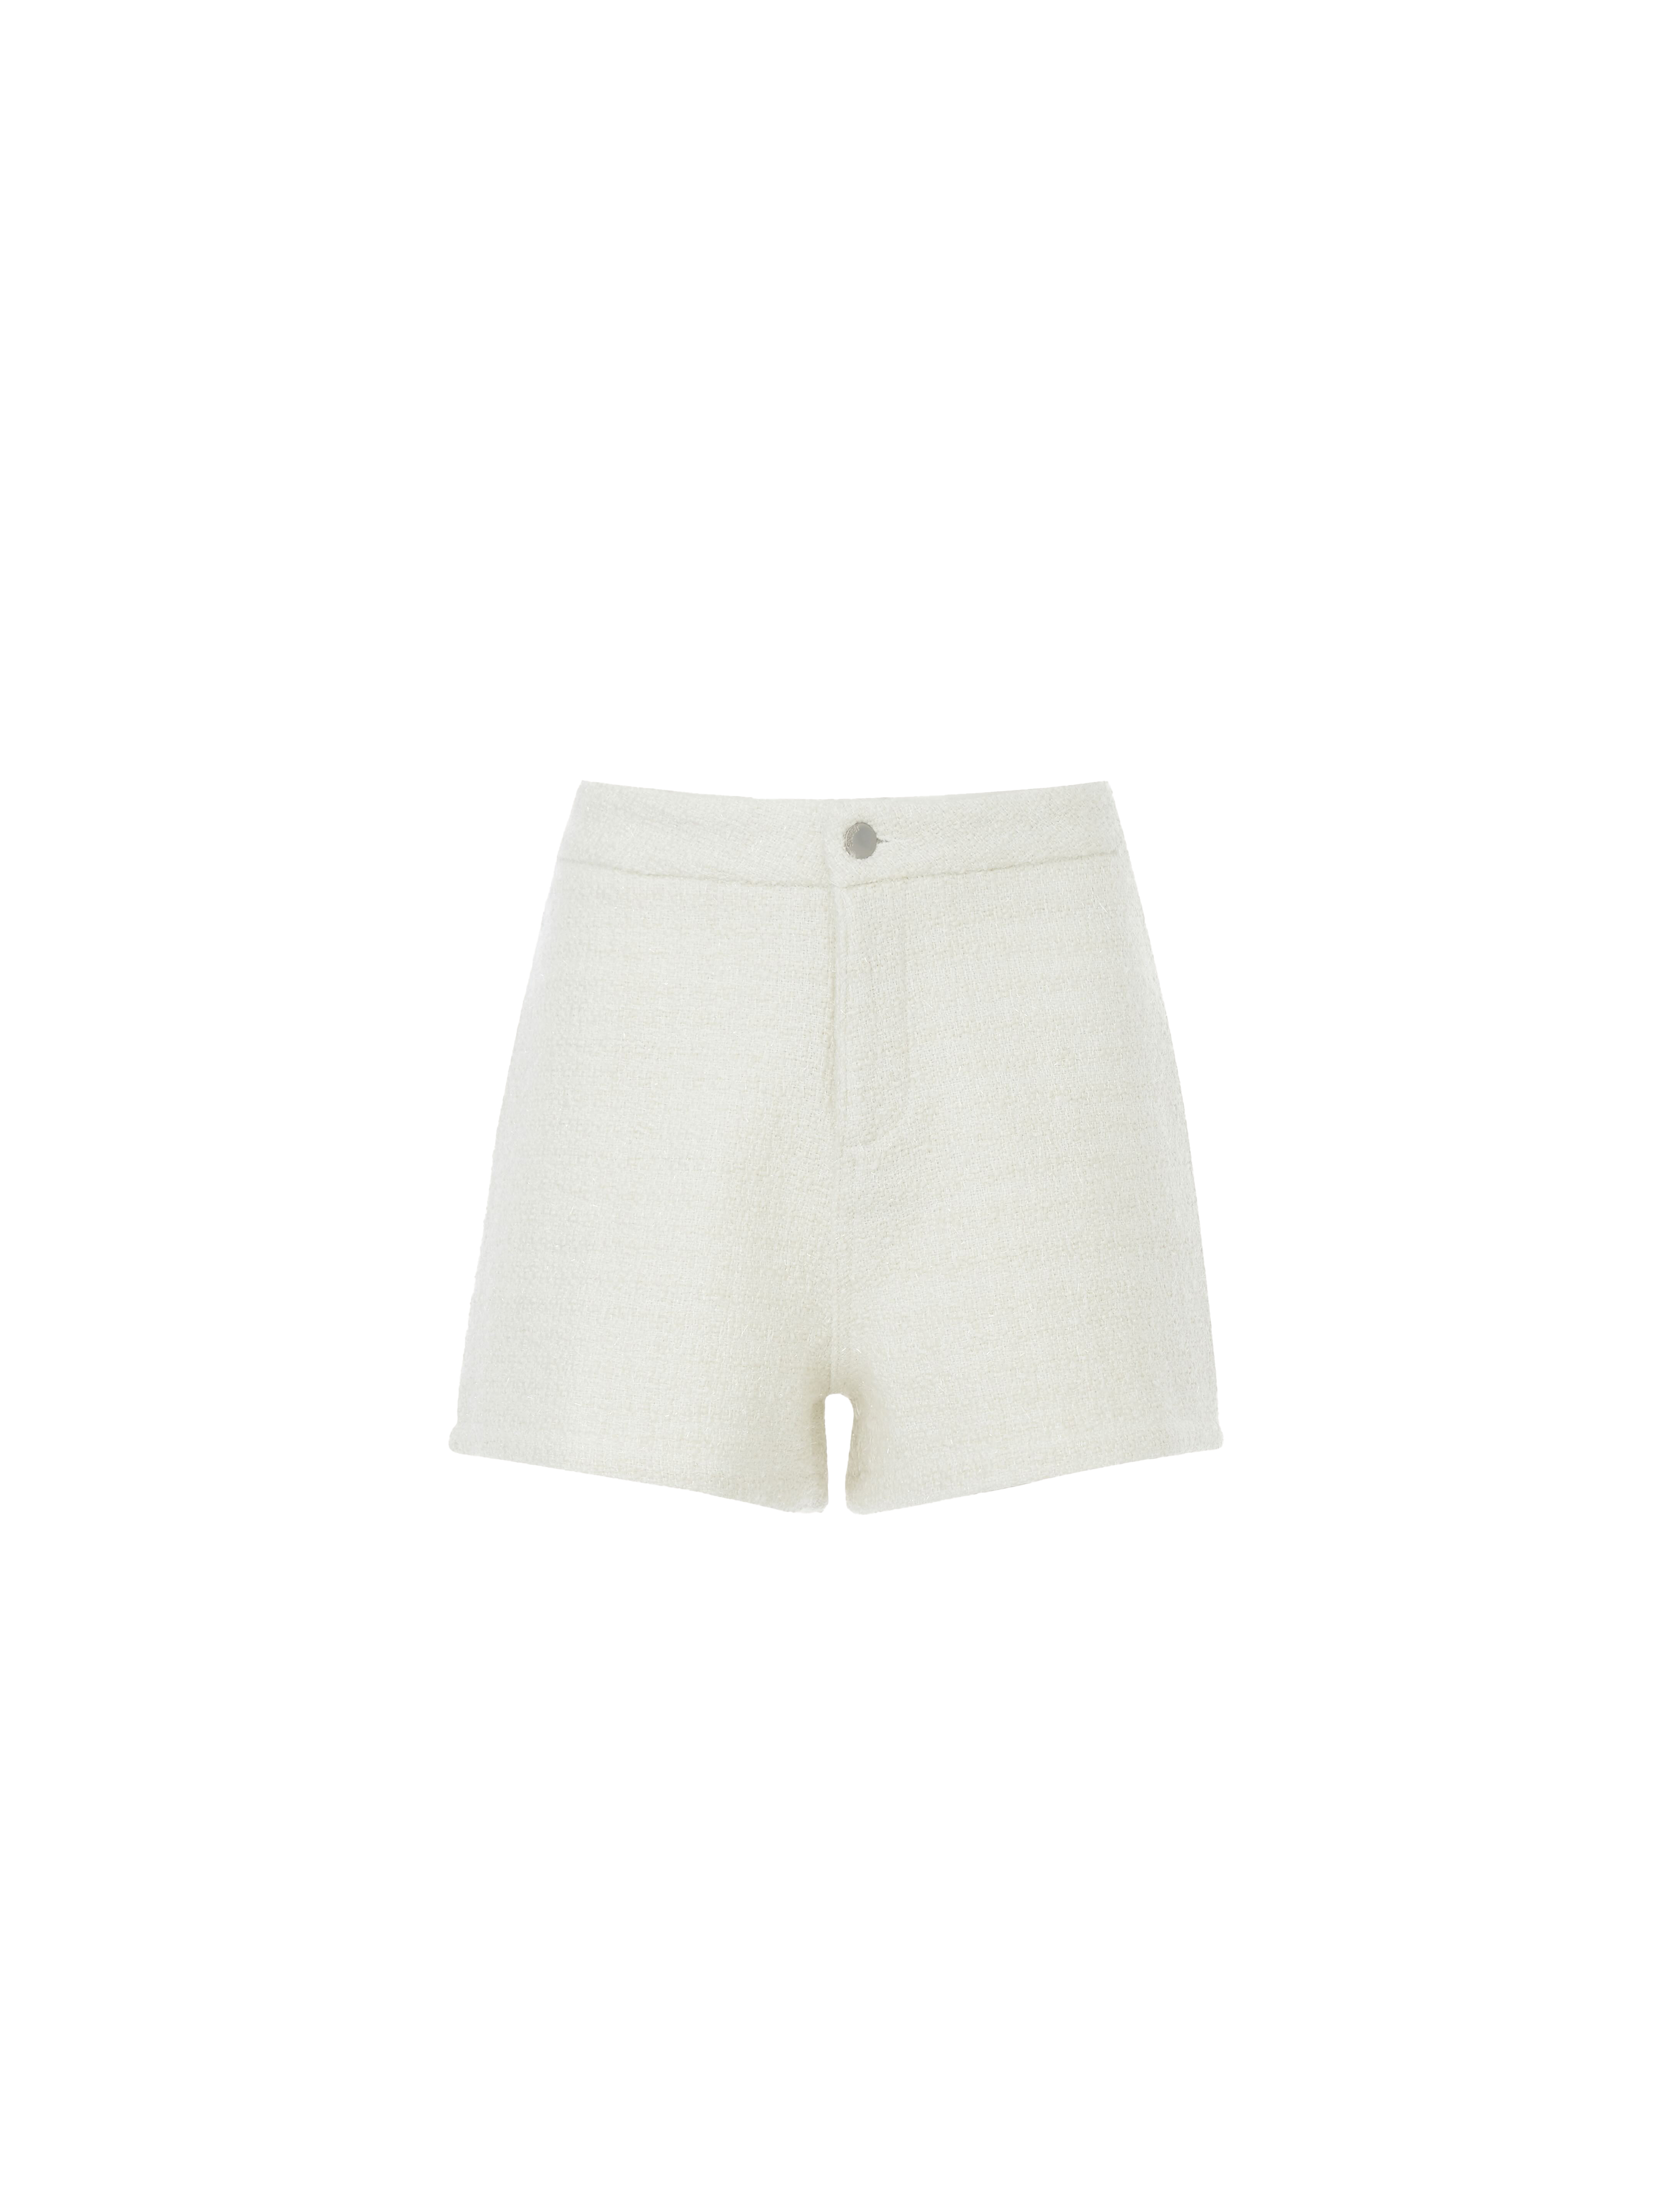 shimmer tweed shorts - white (最多需要一週)